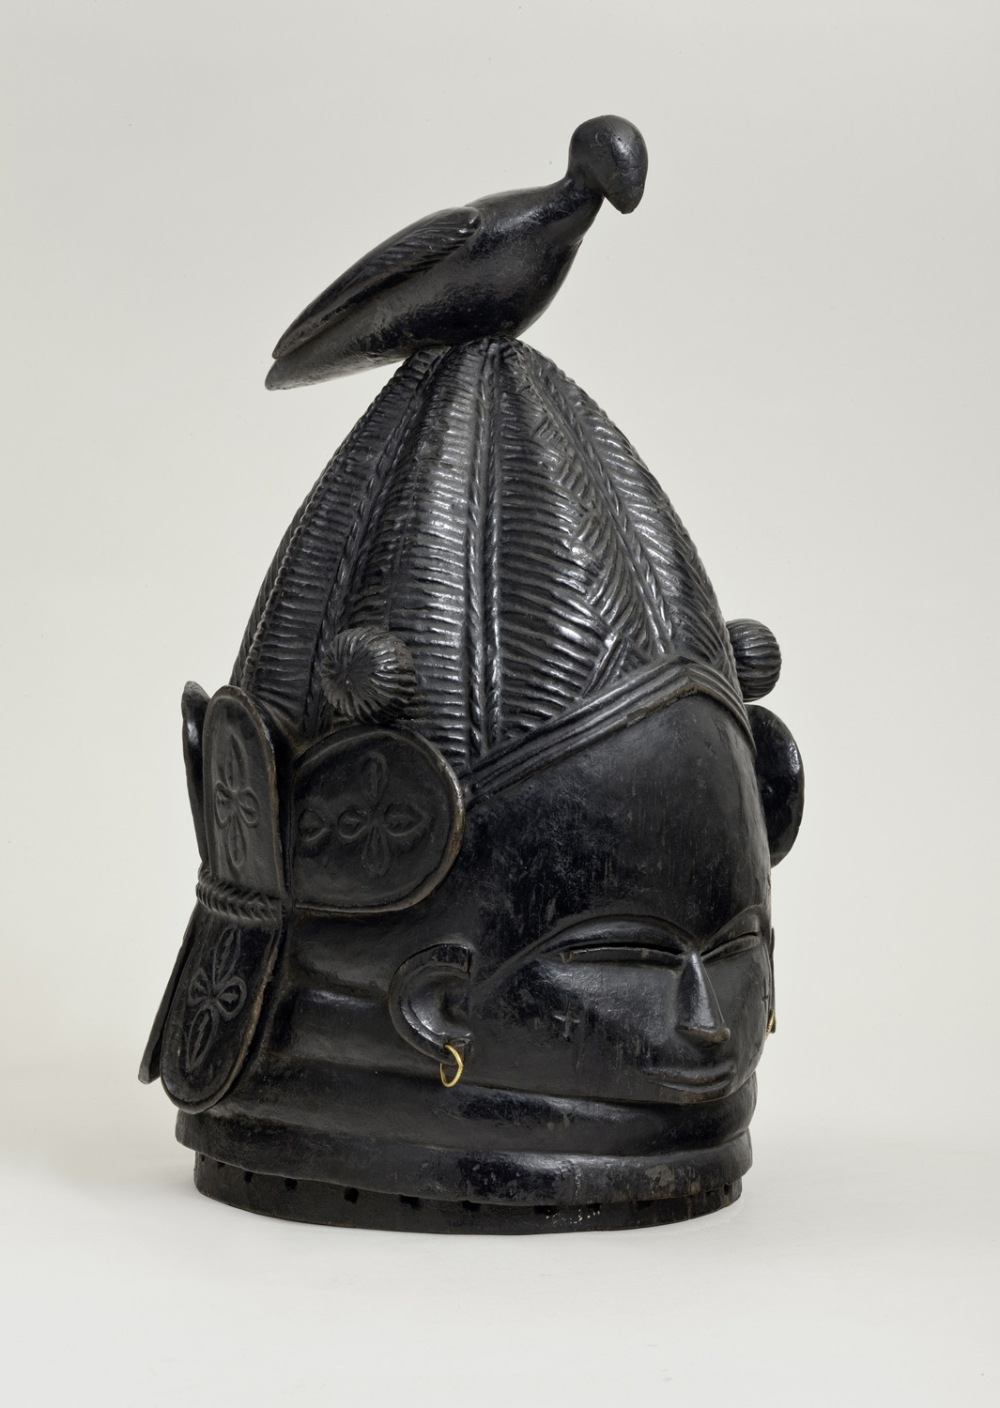 thumbnail of Helmet mask (sowei) from Mende, Sierra Leone. medium: wood, black. dimensions: 16 x 10 inches